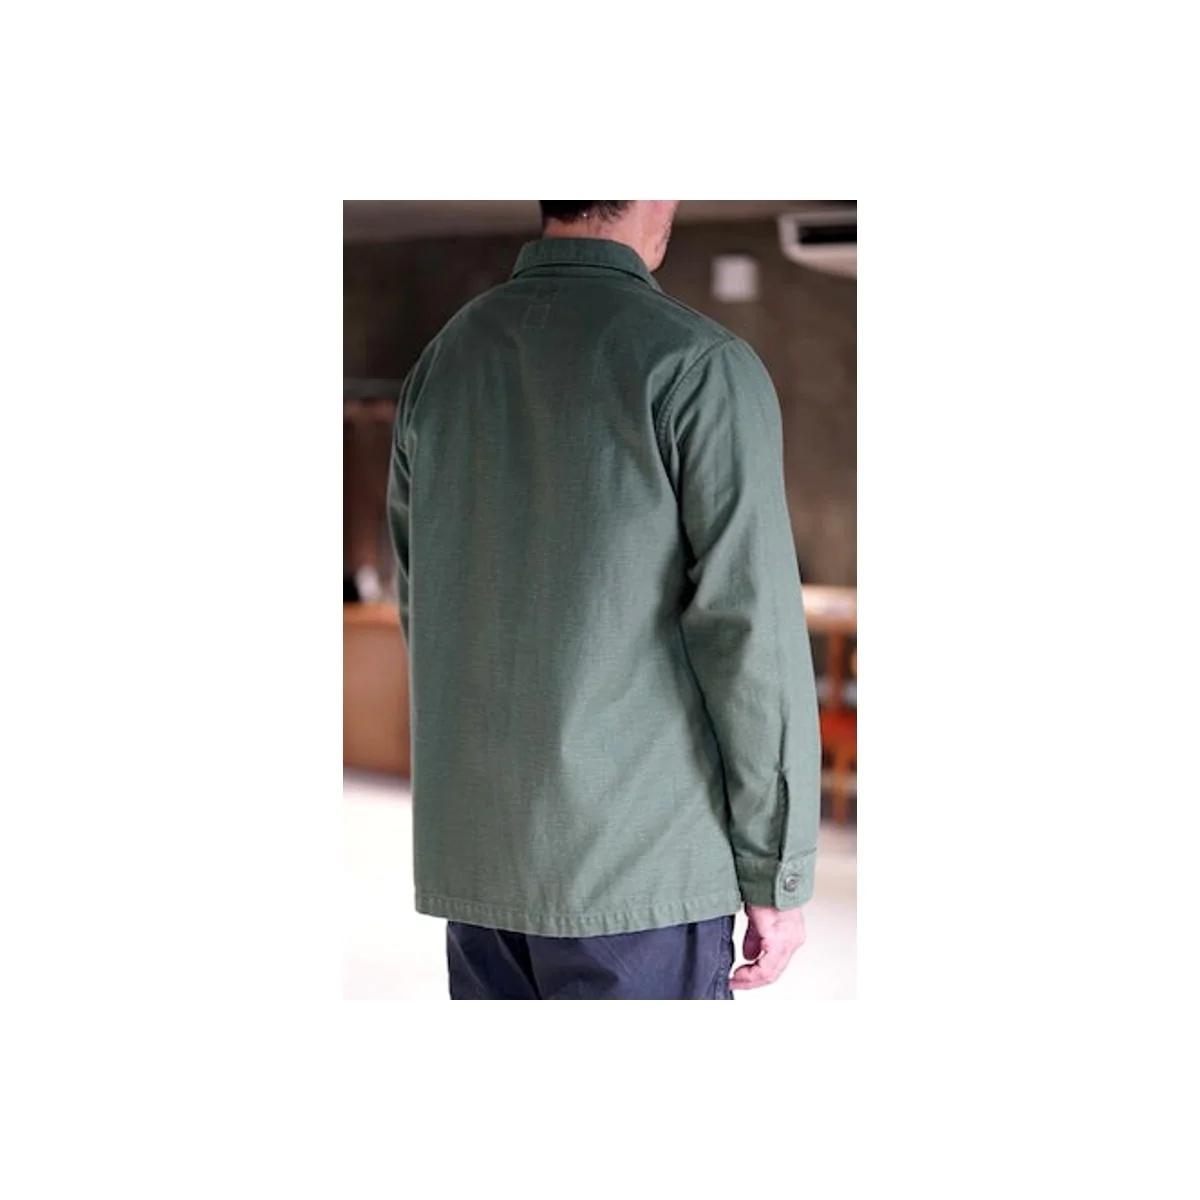 Fatigue Shirt Jacket Green - Shirt Jacket